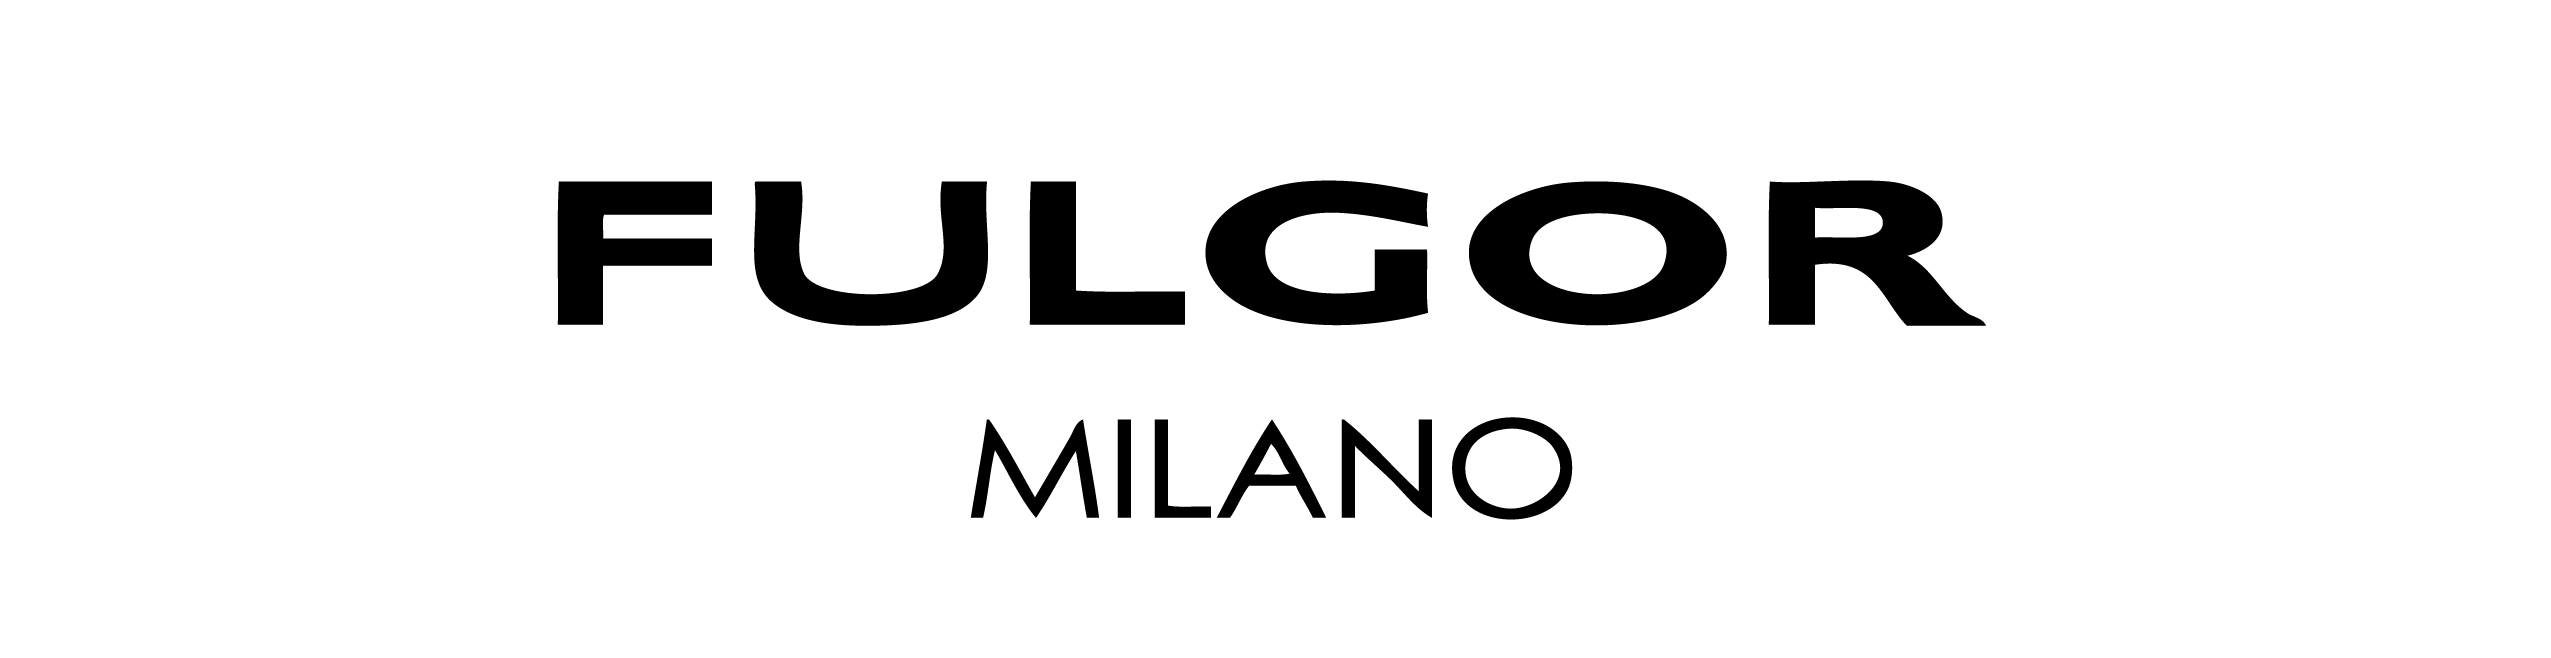 Fulgor Milano logo